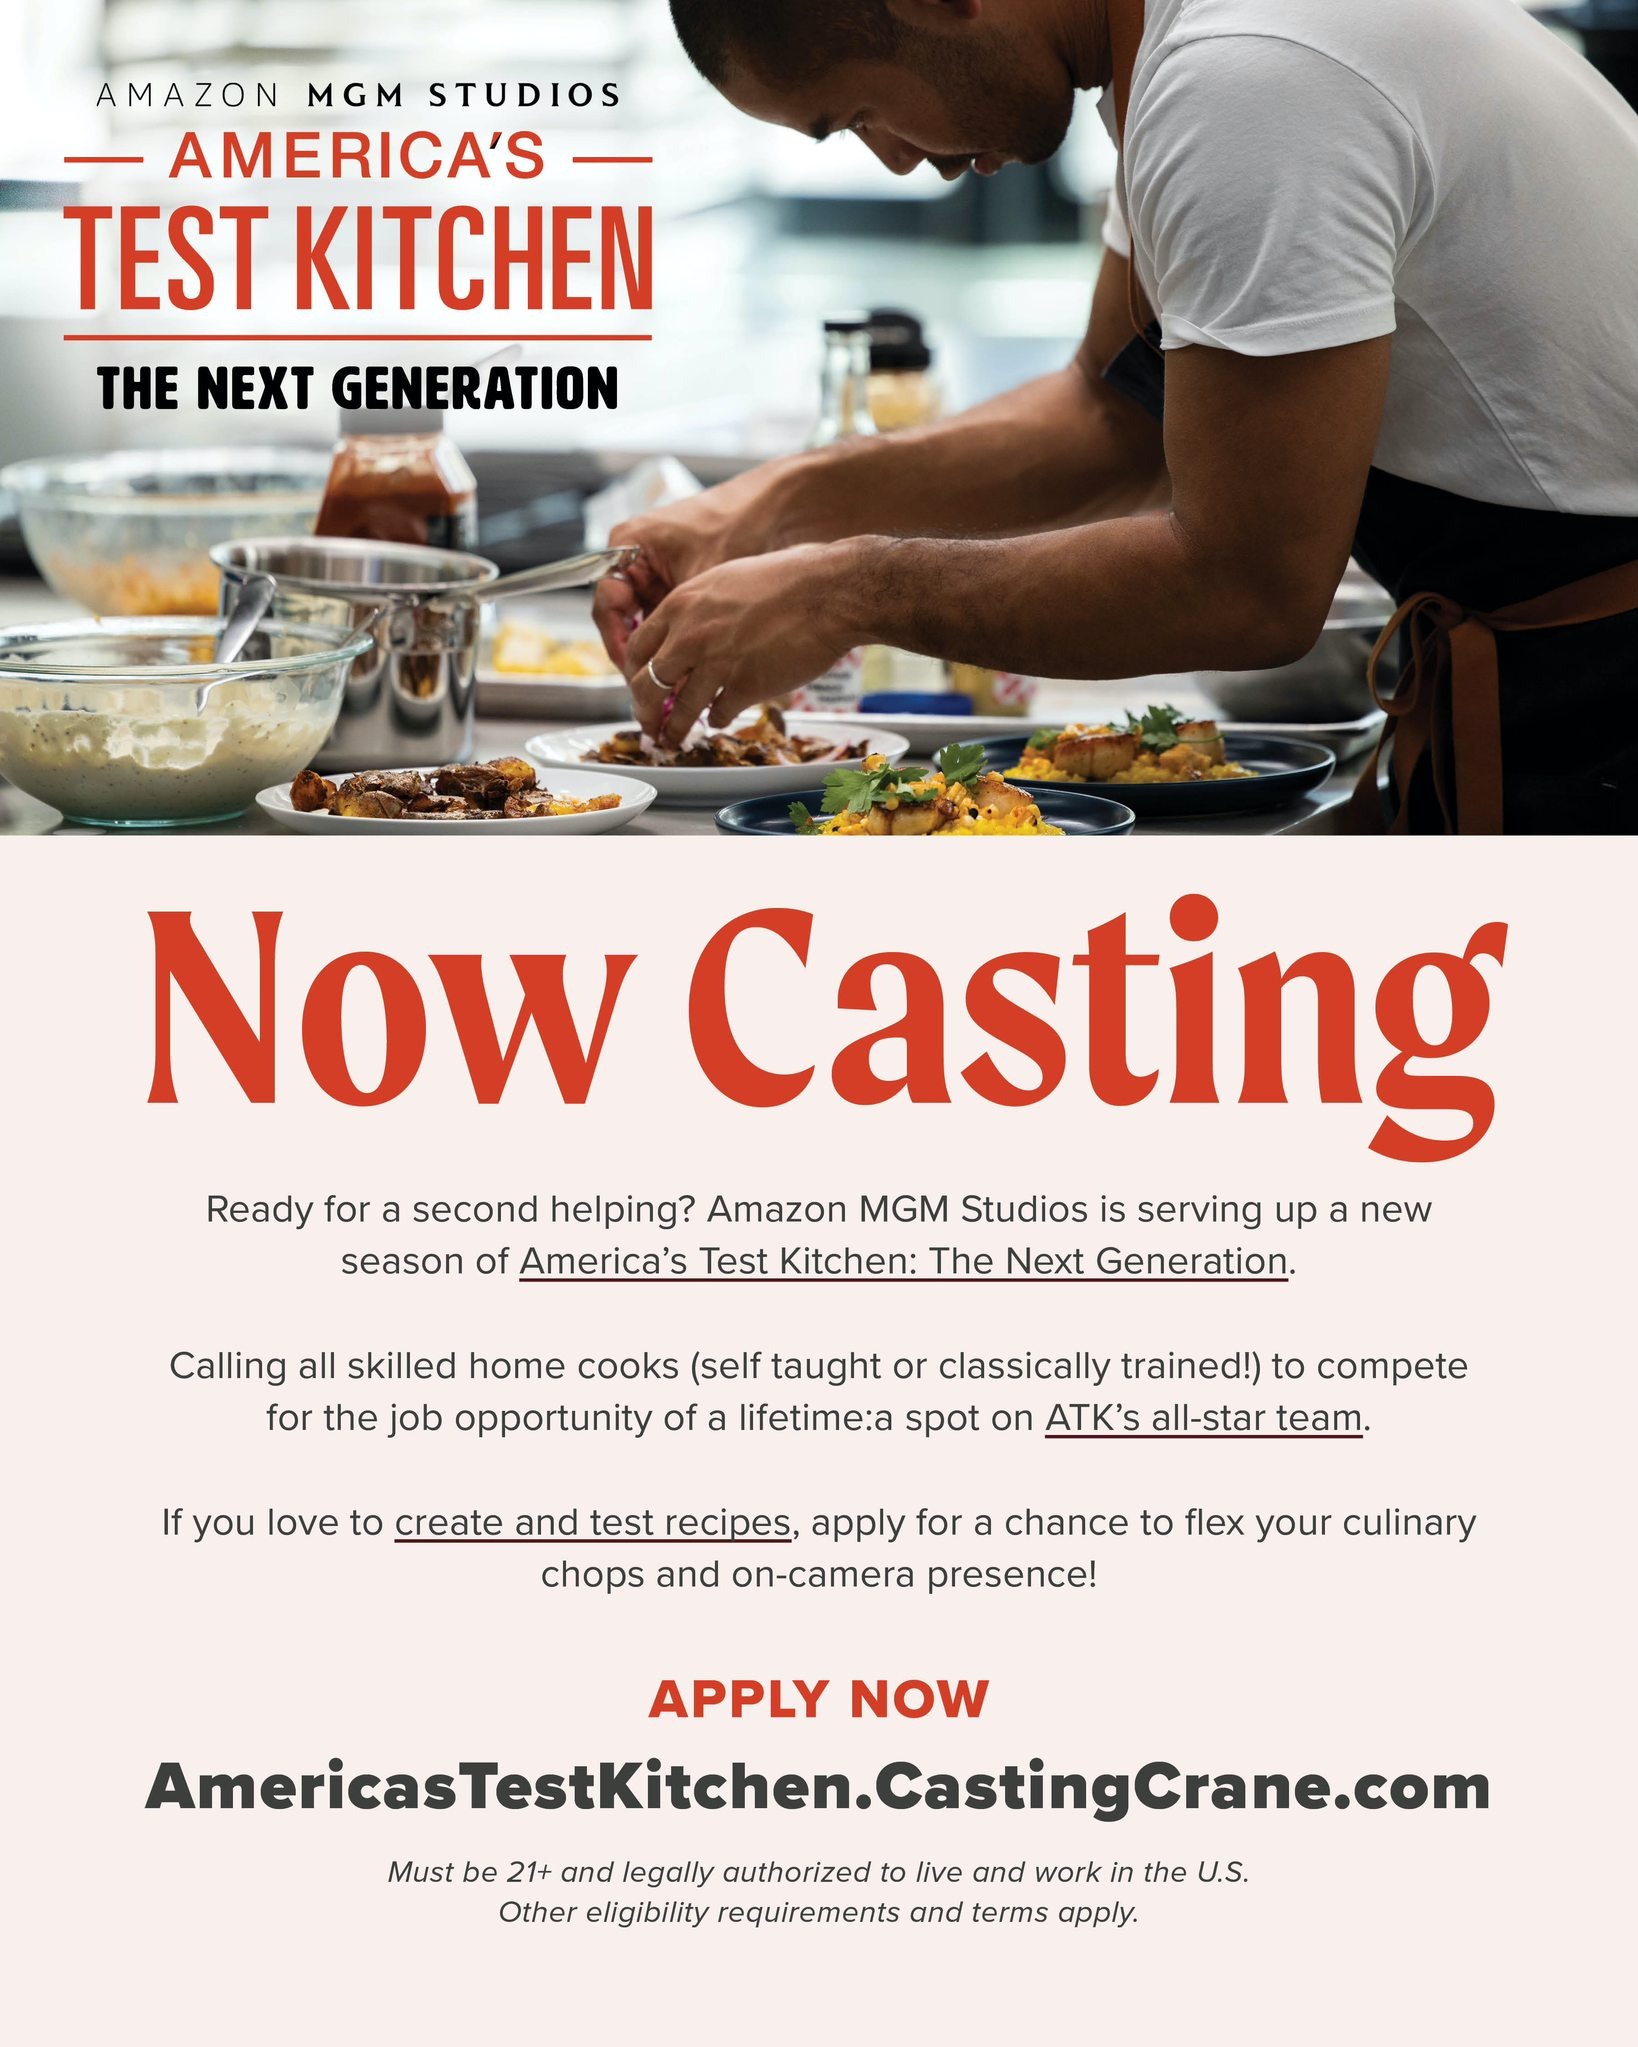 America's Test Kitchen: The Next Generation